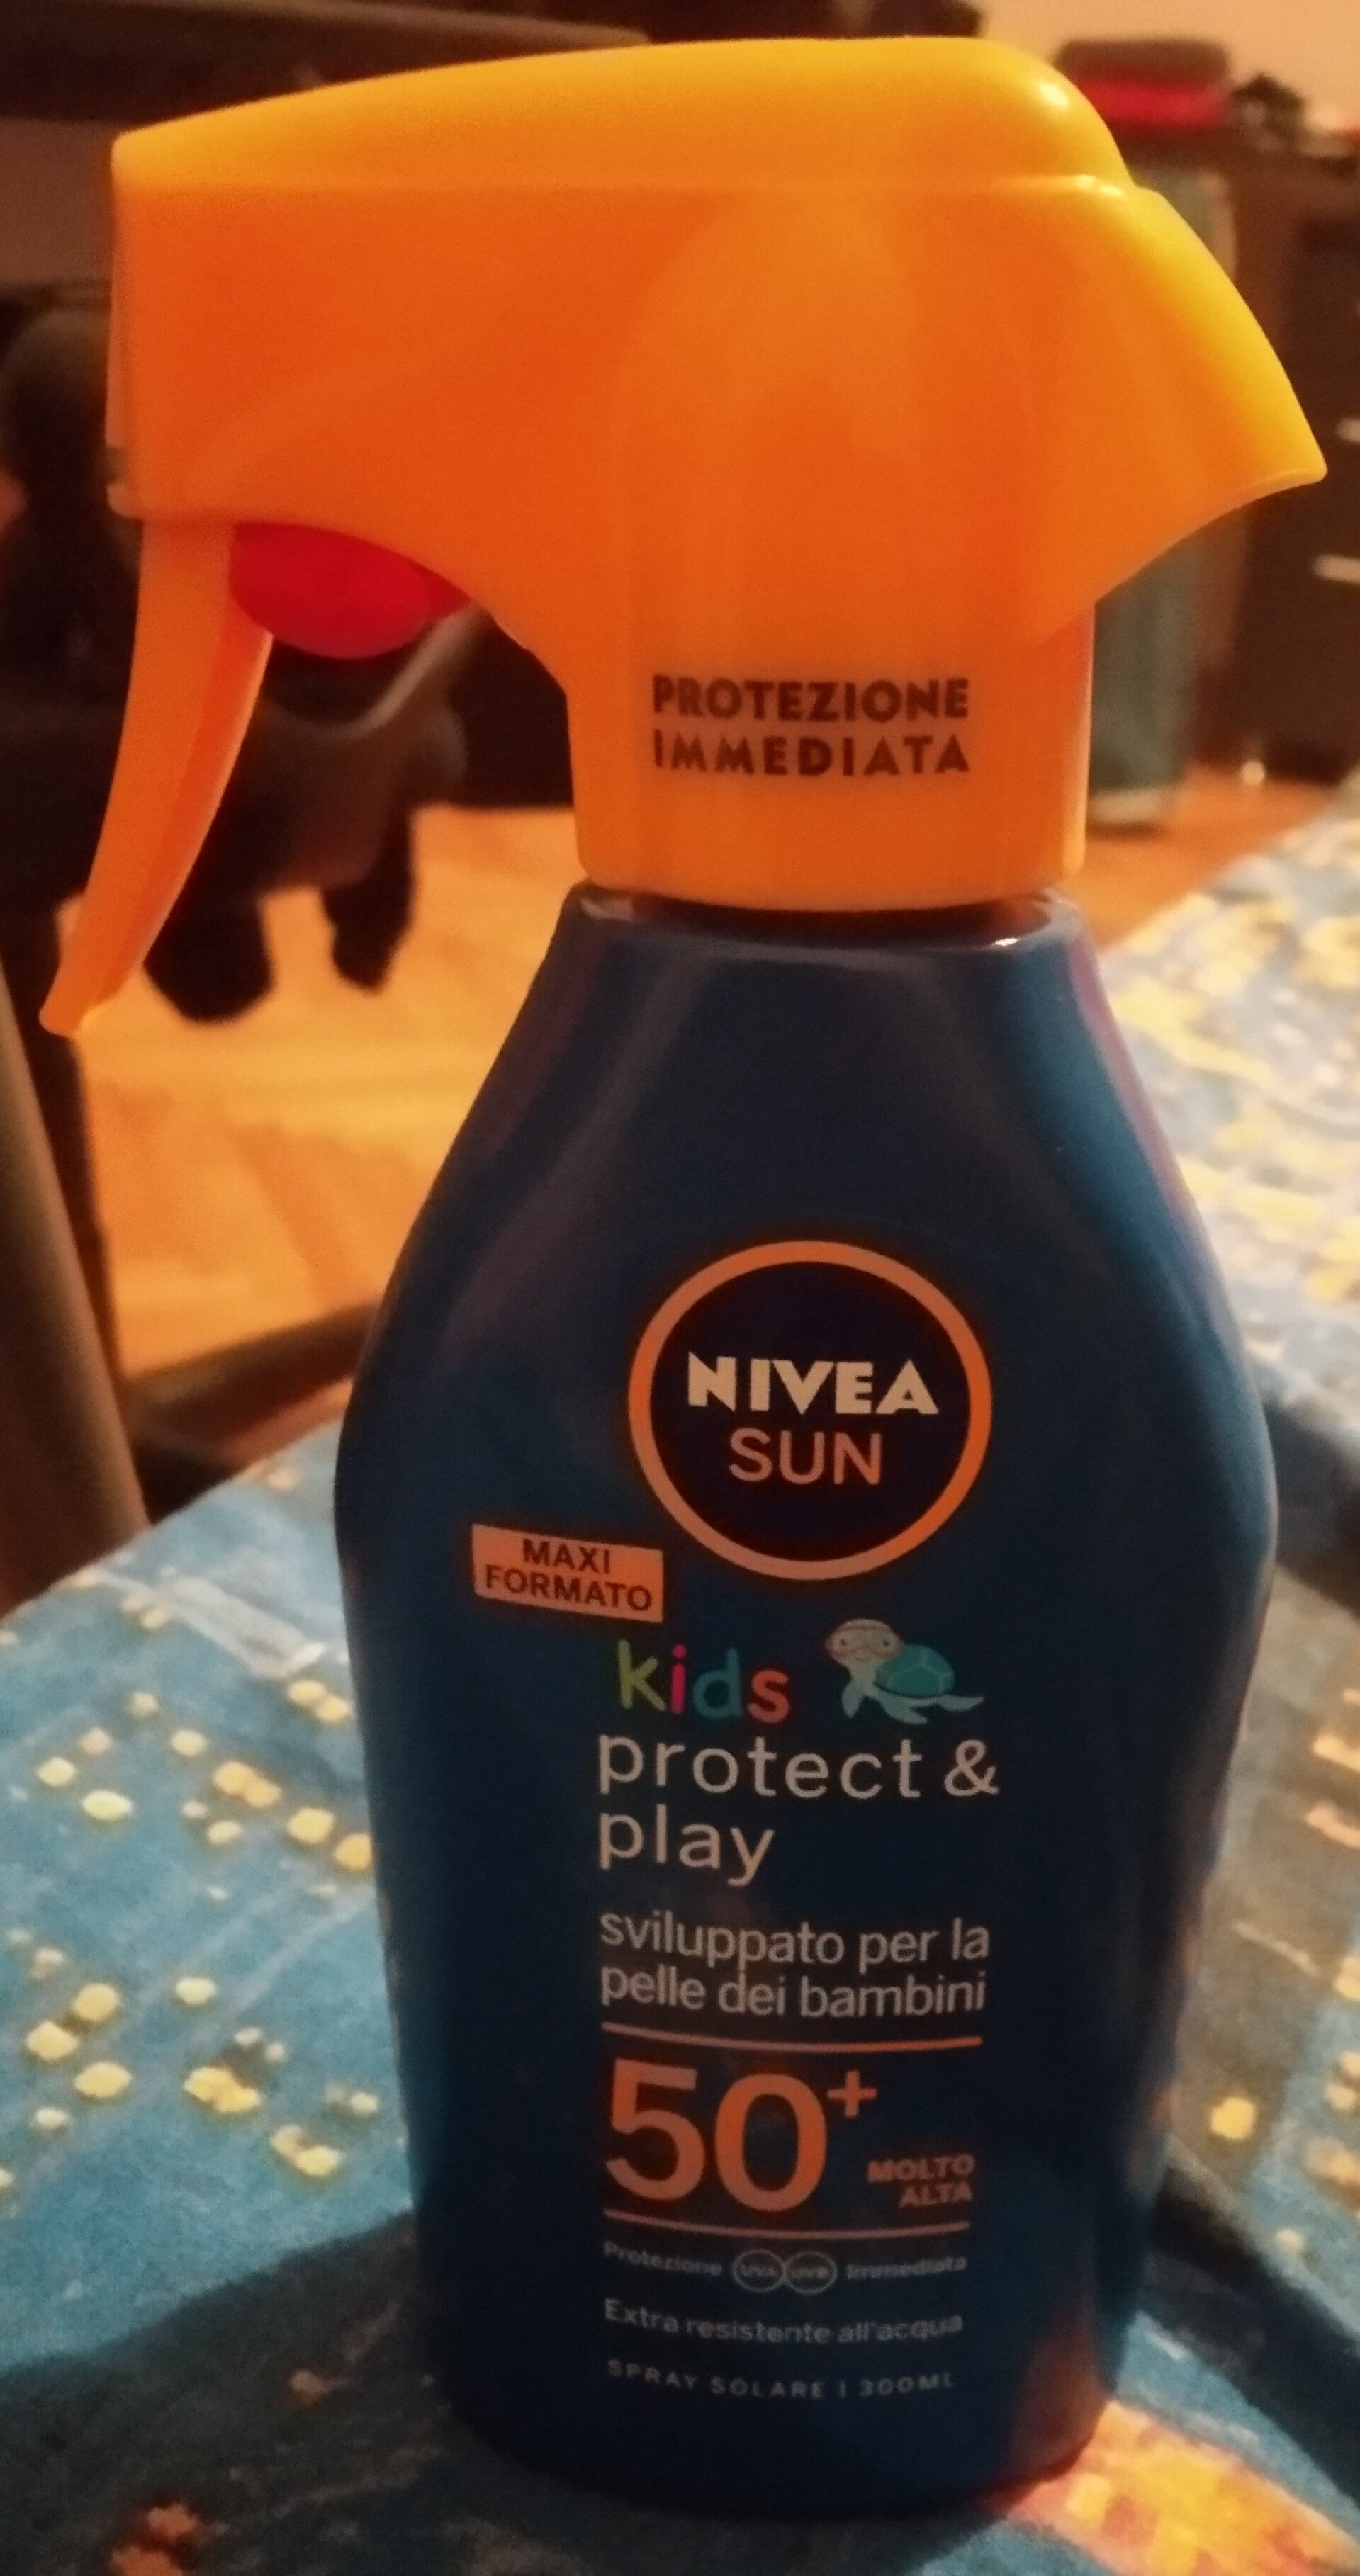 Nivea sun kids protect & play 50+ - מוצר - it